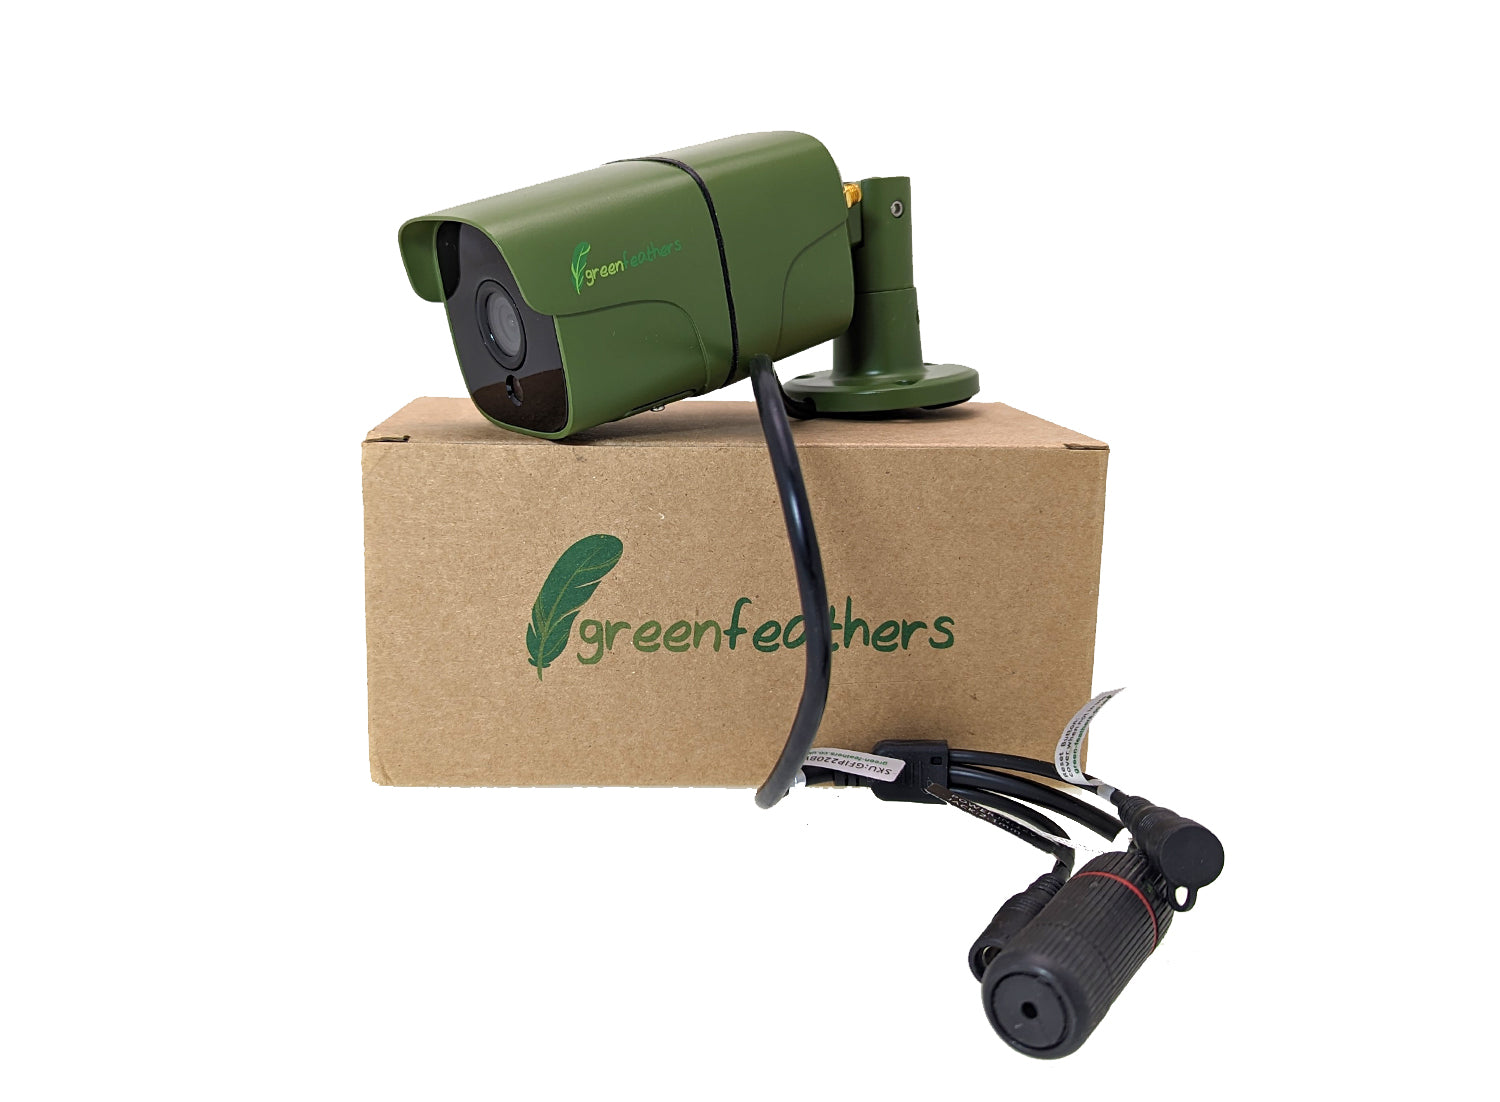 refurbished garden wildlife wifi bullet camera on top of box